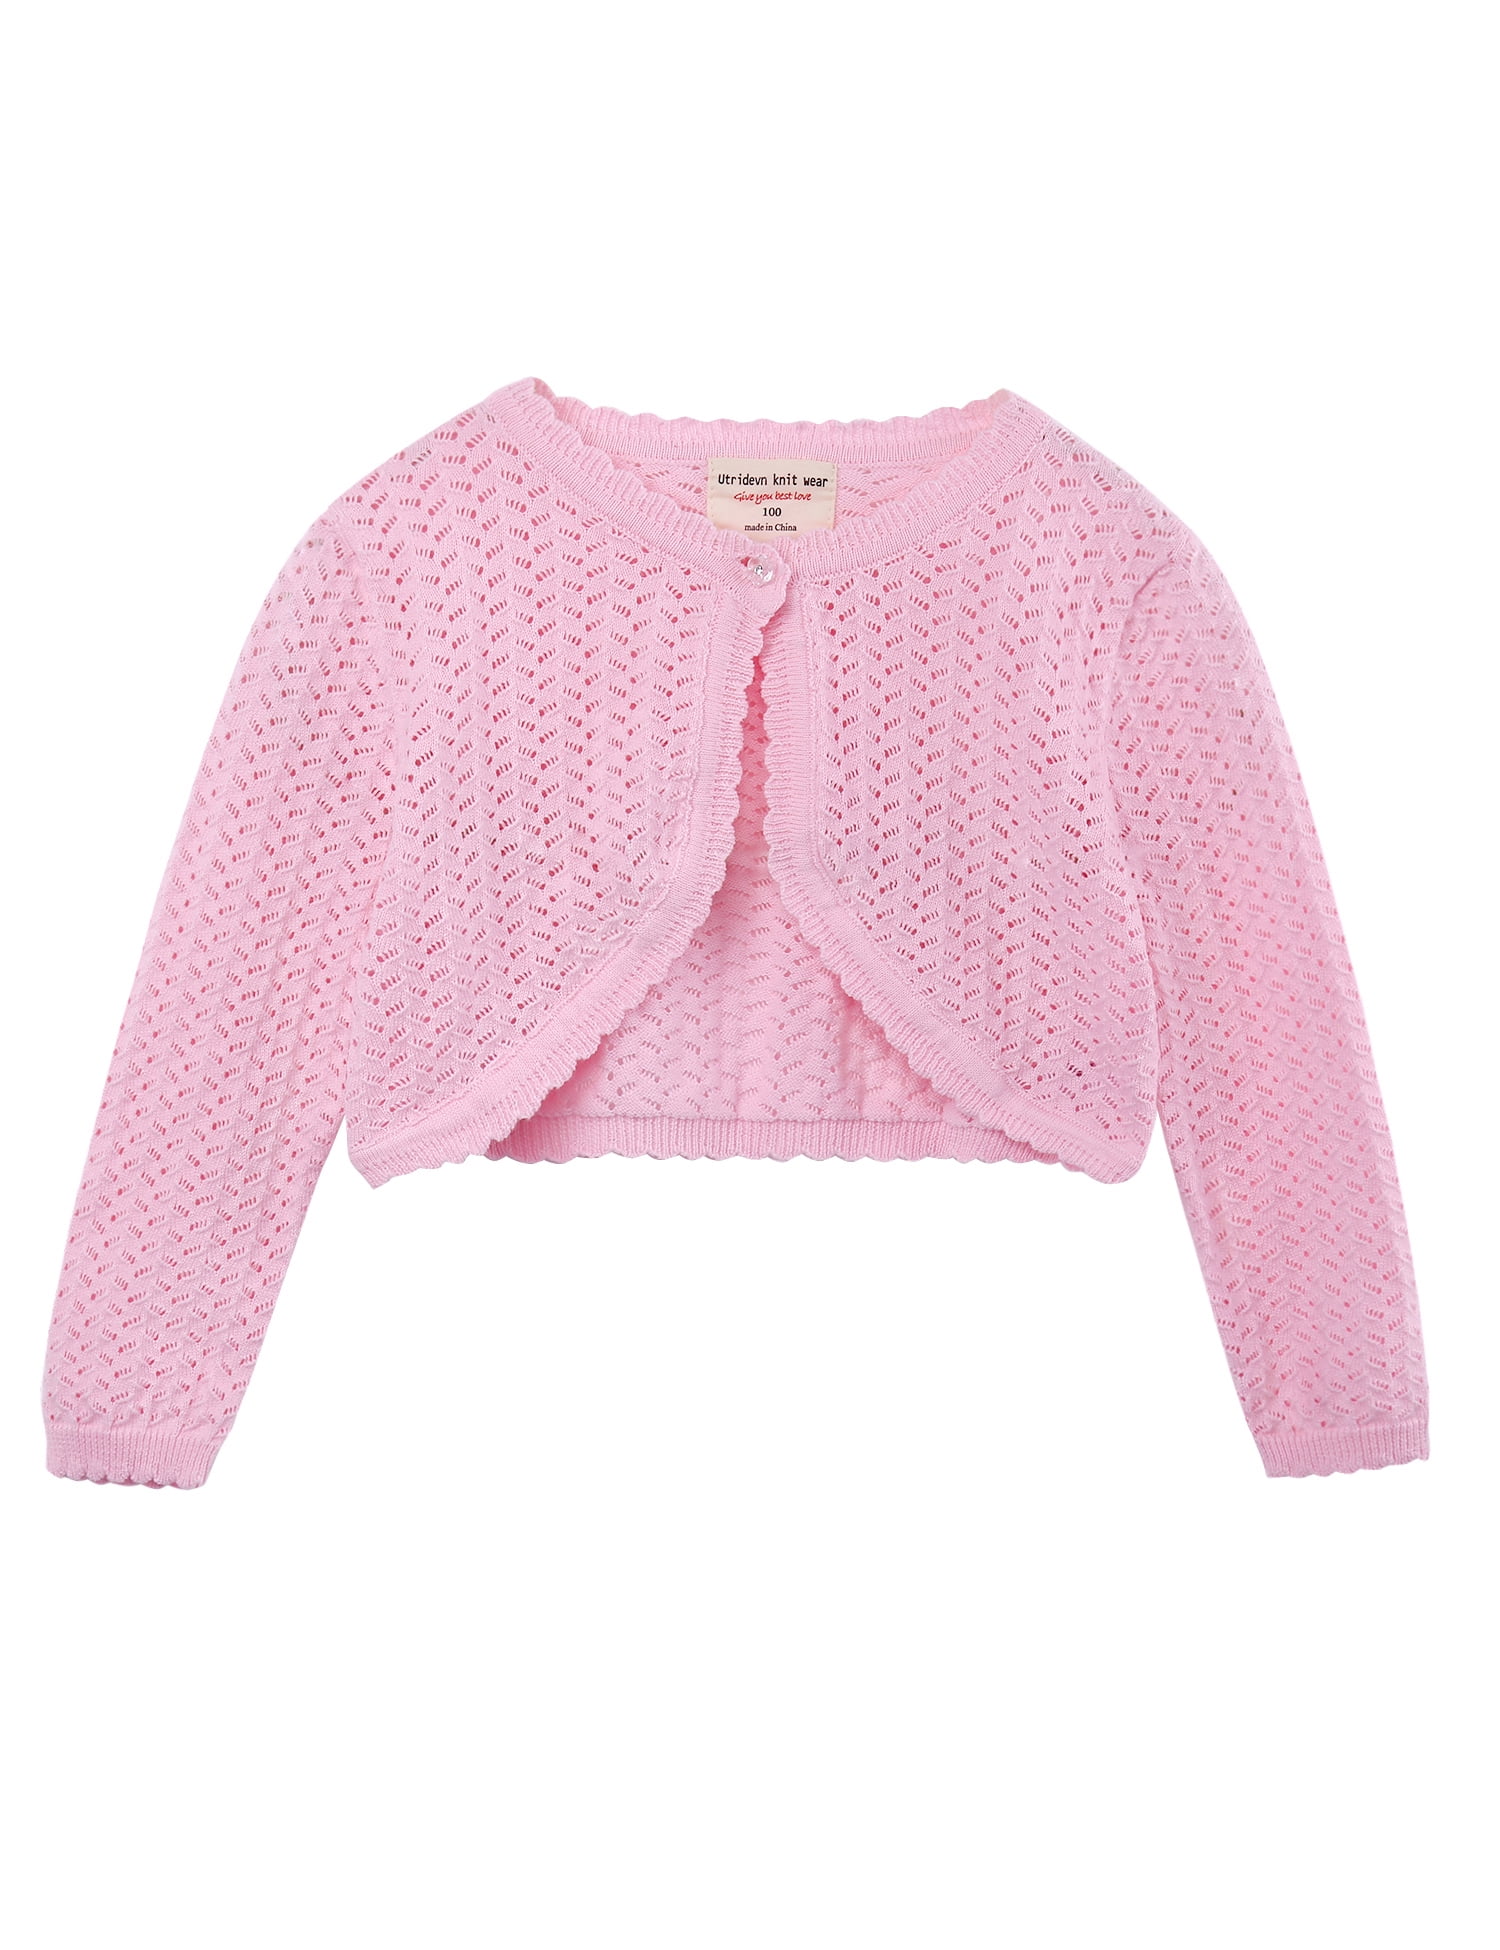 Girls Bolero Shrugs Long Sleeve Cotton Cardigan Jacket Sweater for Little Girls Hot Dress Cover up 